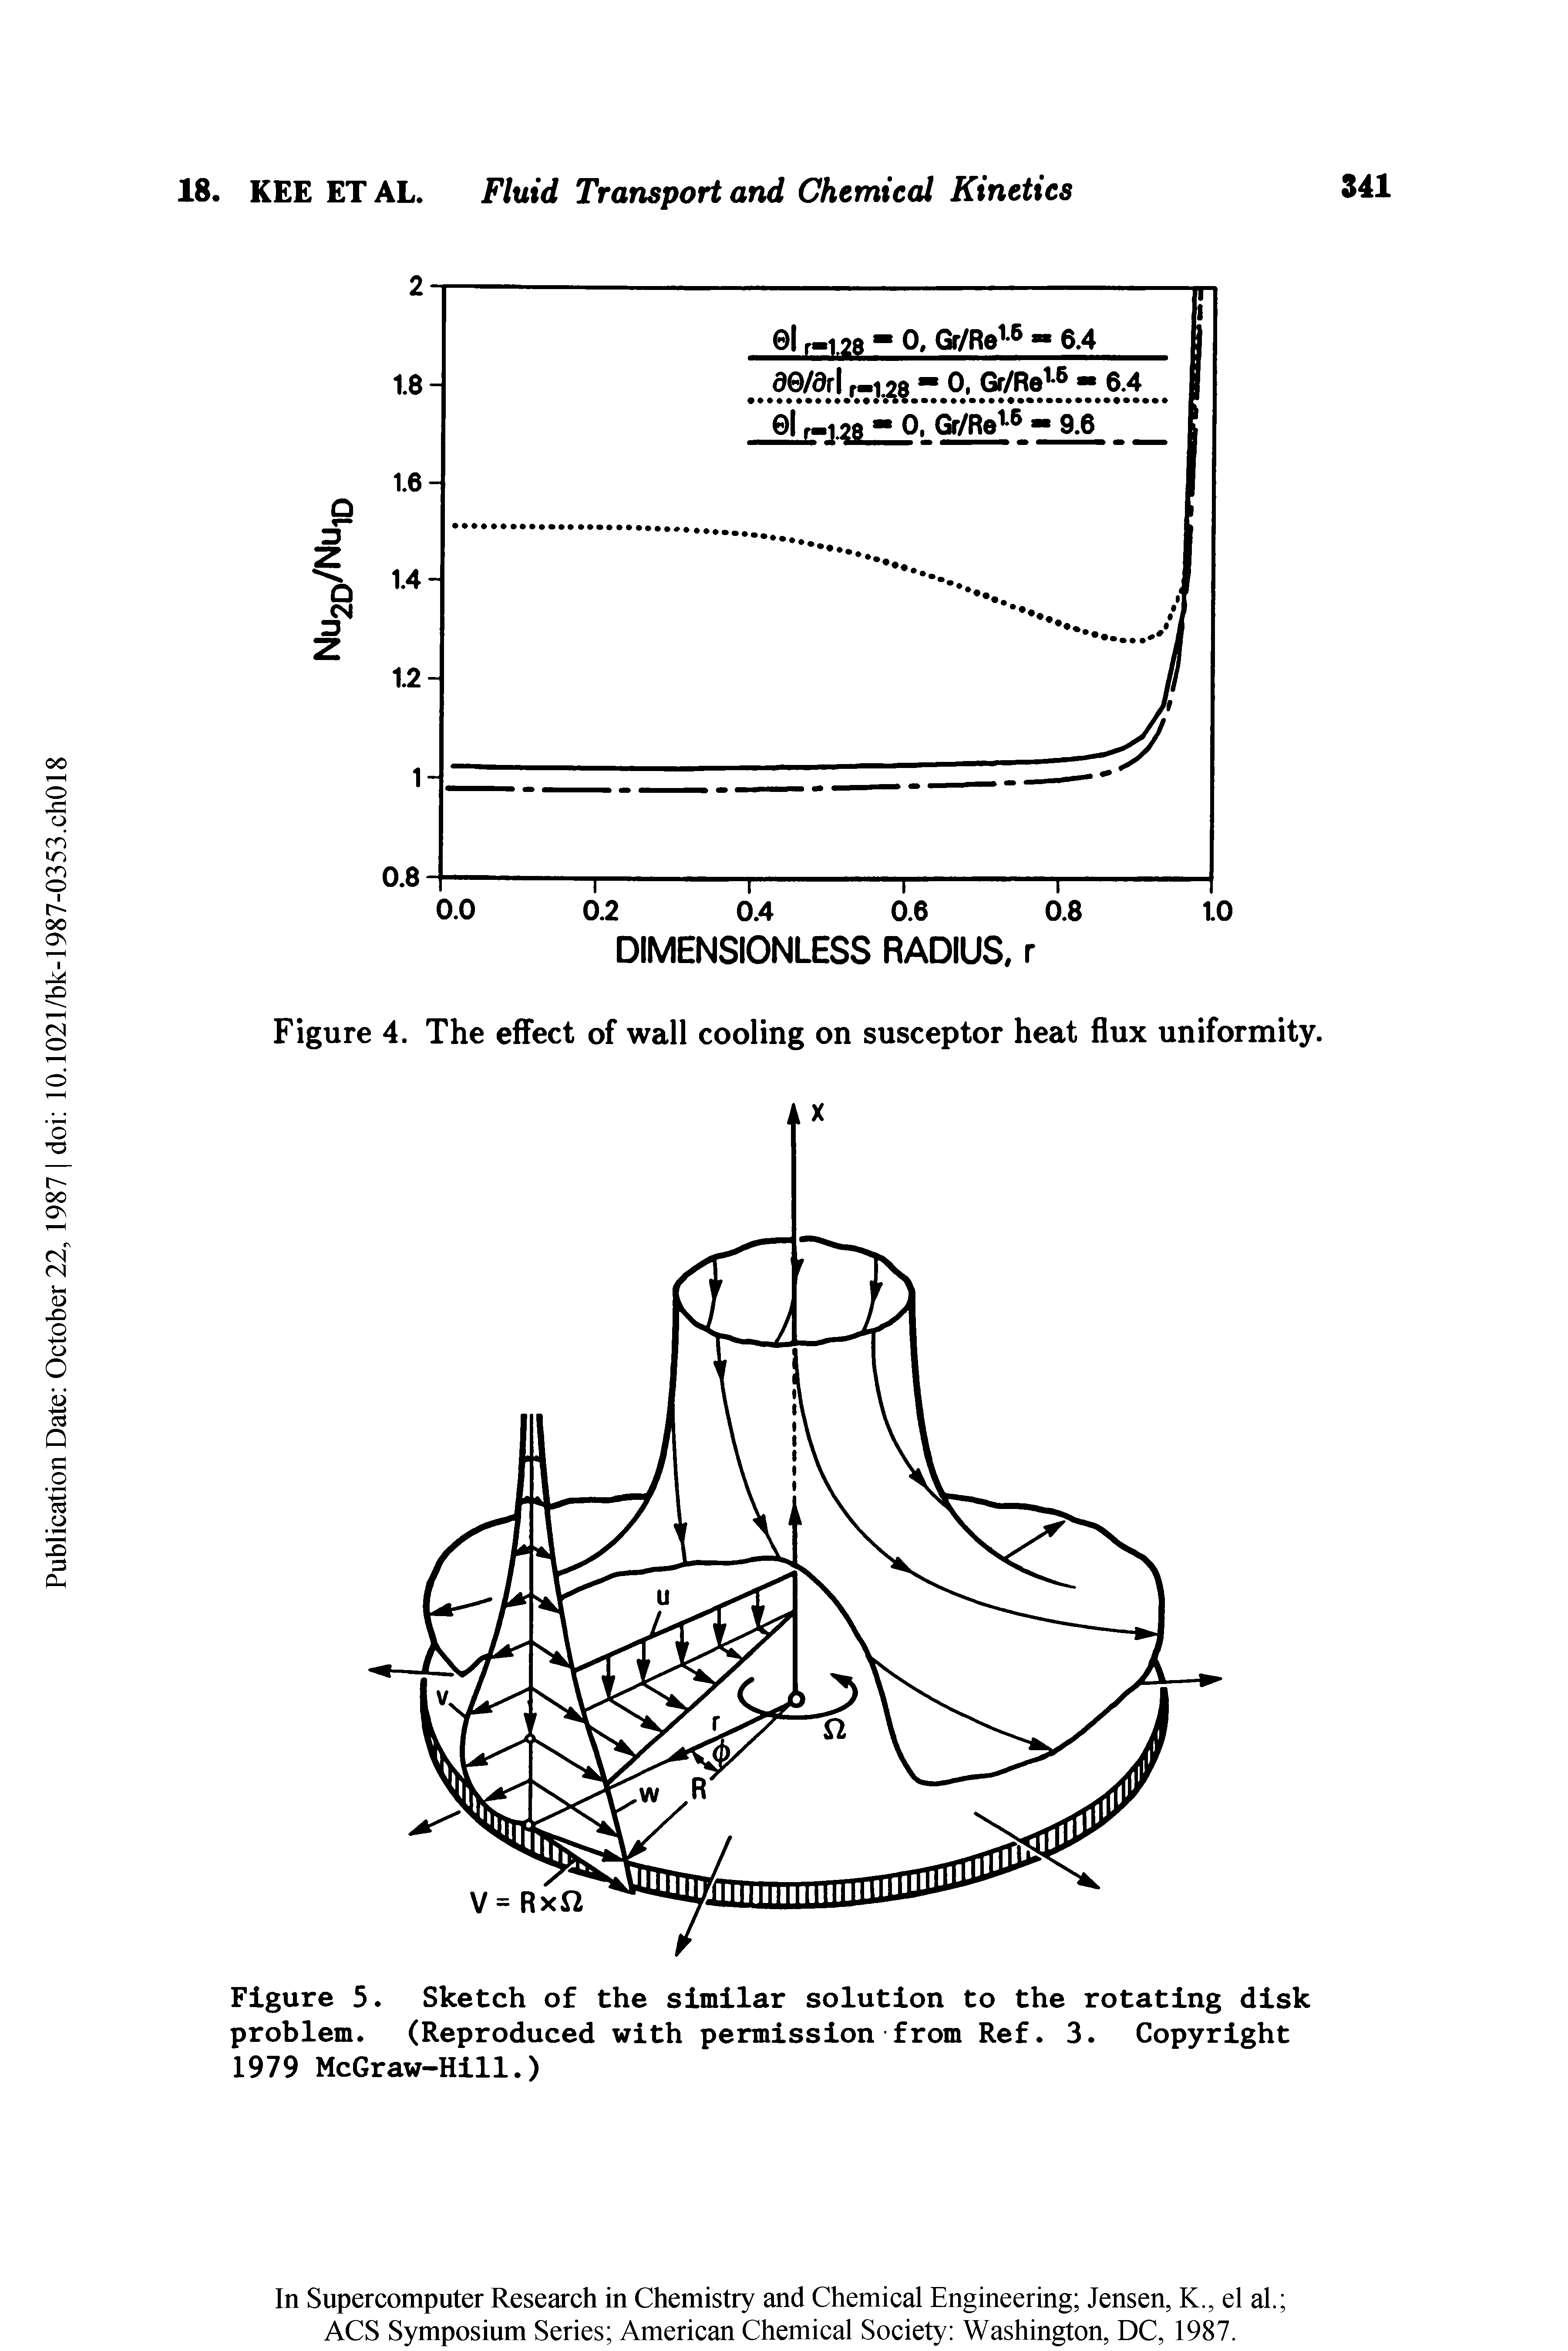 Figure 4. The effect of wall cooling on susceptor heat flux uniformity.